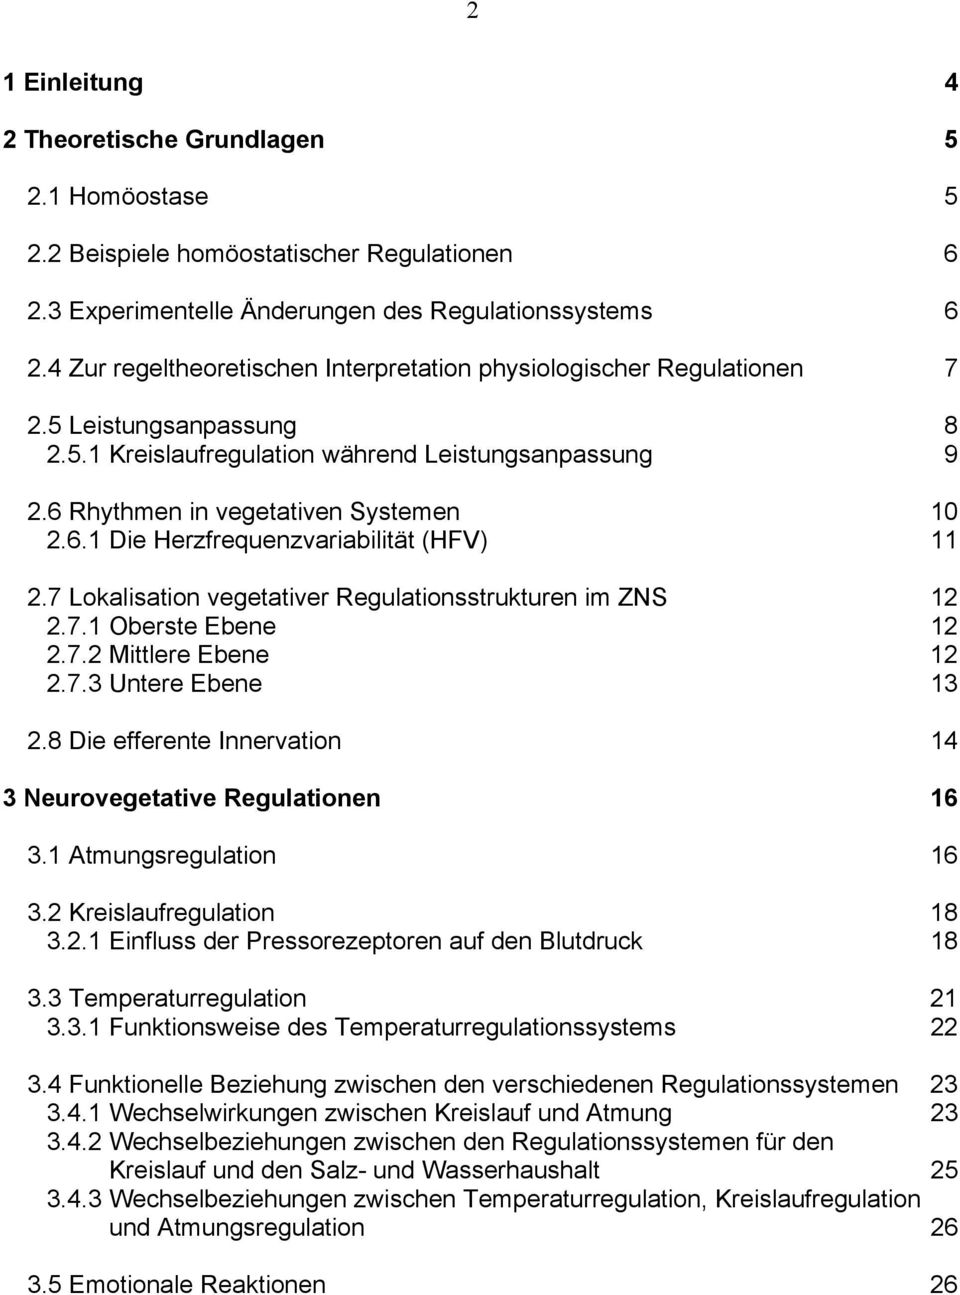 7 Lokalisation vegetativer Regulationsstrukturen im ZNS 12 2.7.1 Oberste Ebene 12 2.7.2 Mittlere Ebene 12 2.7.3 Untere Ebene 13 2.8 Die efferente Innervation 14 3 Neurovegetative Regulationen 16 3.